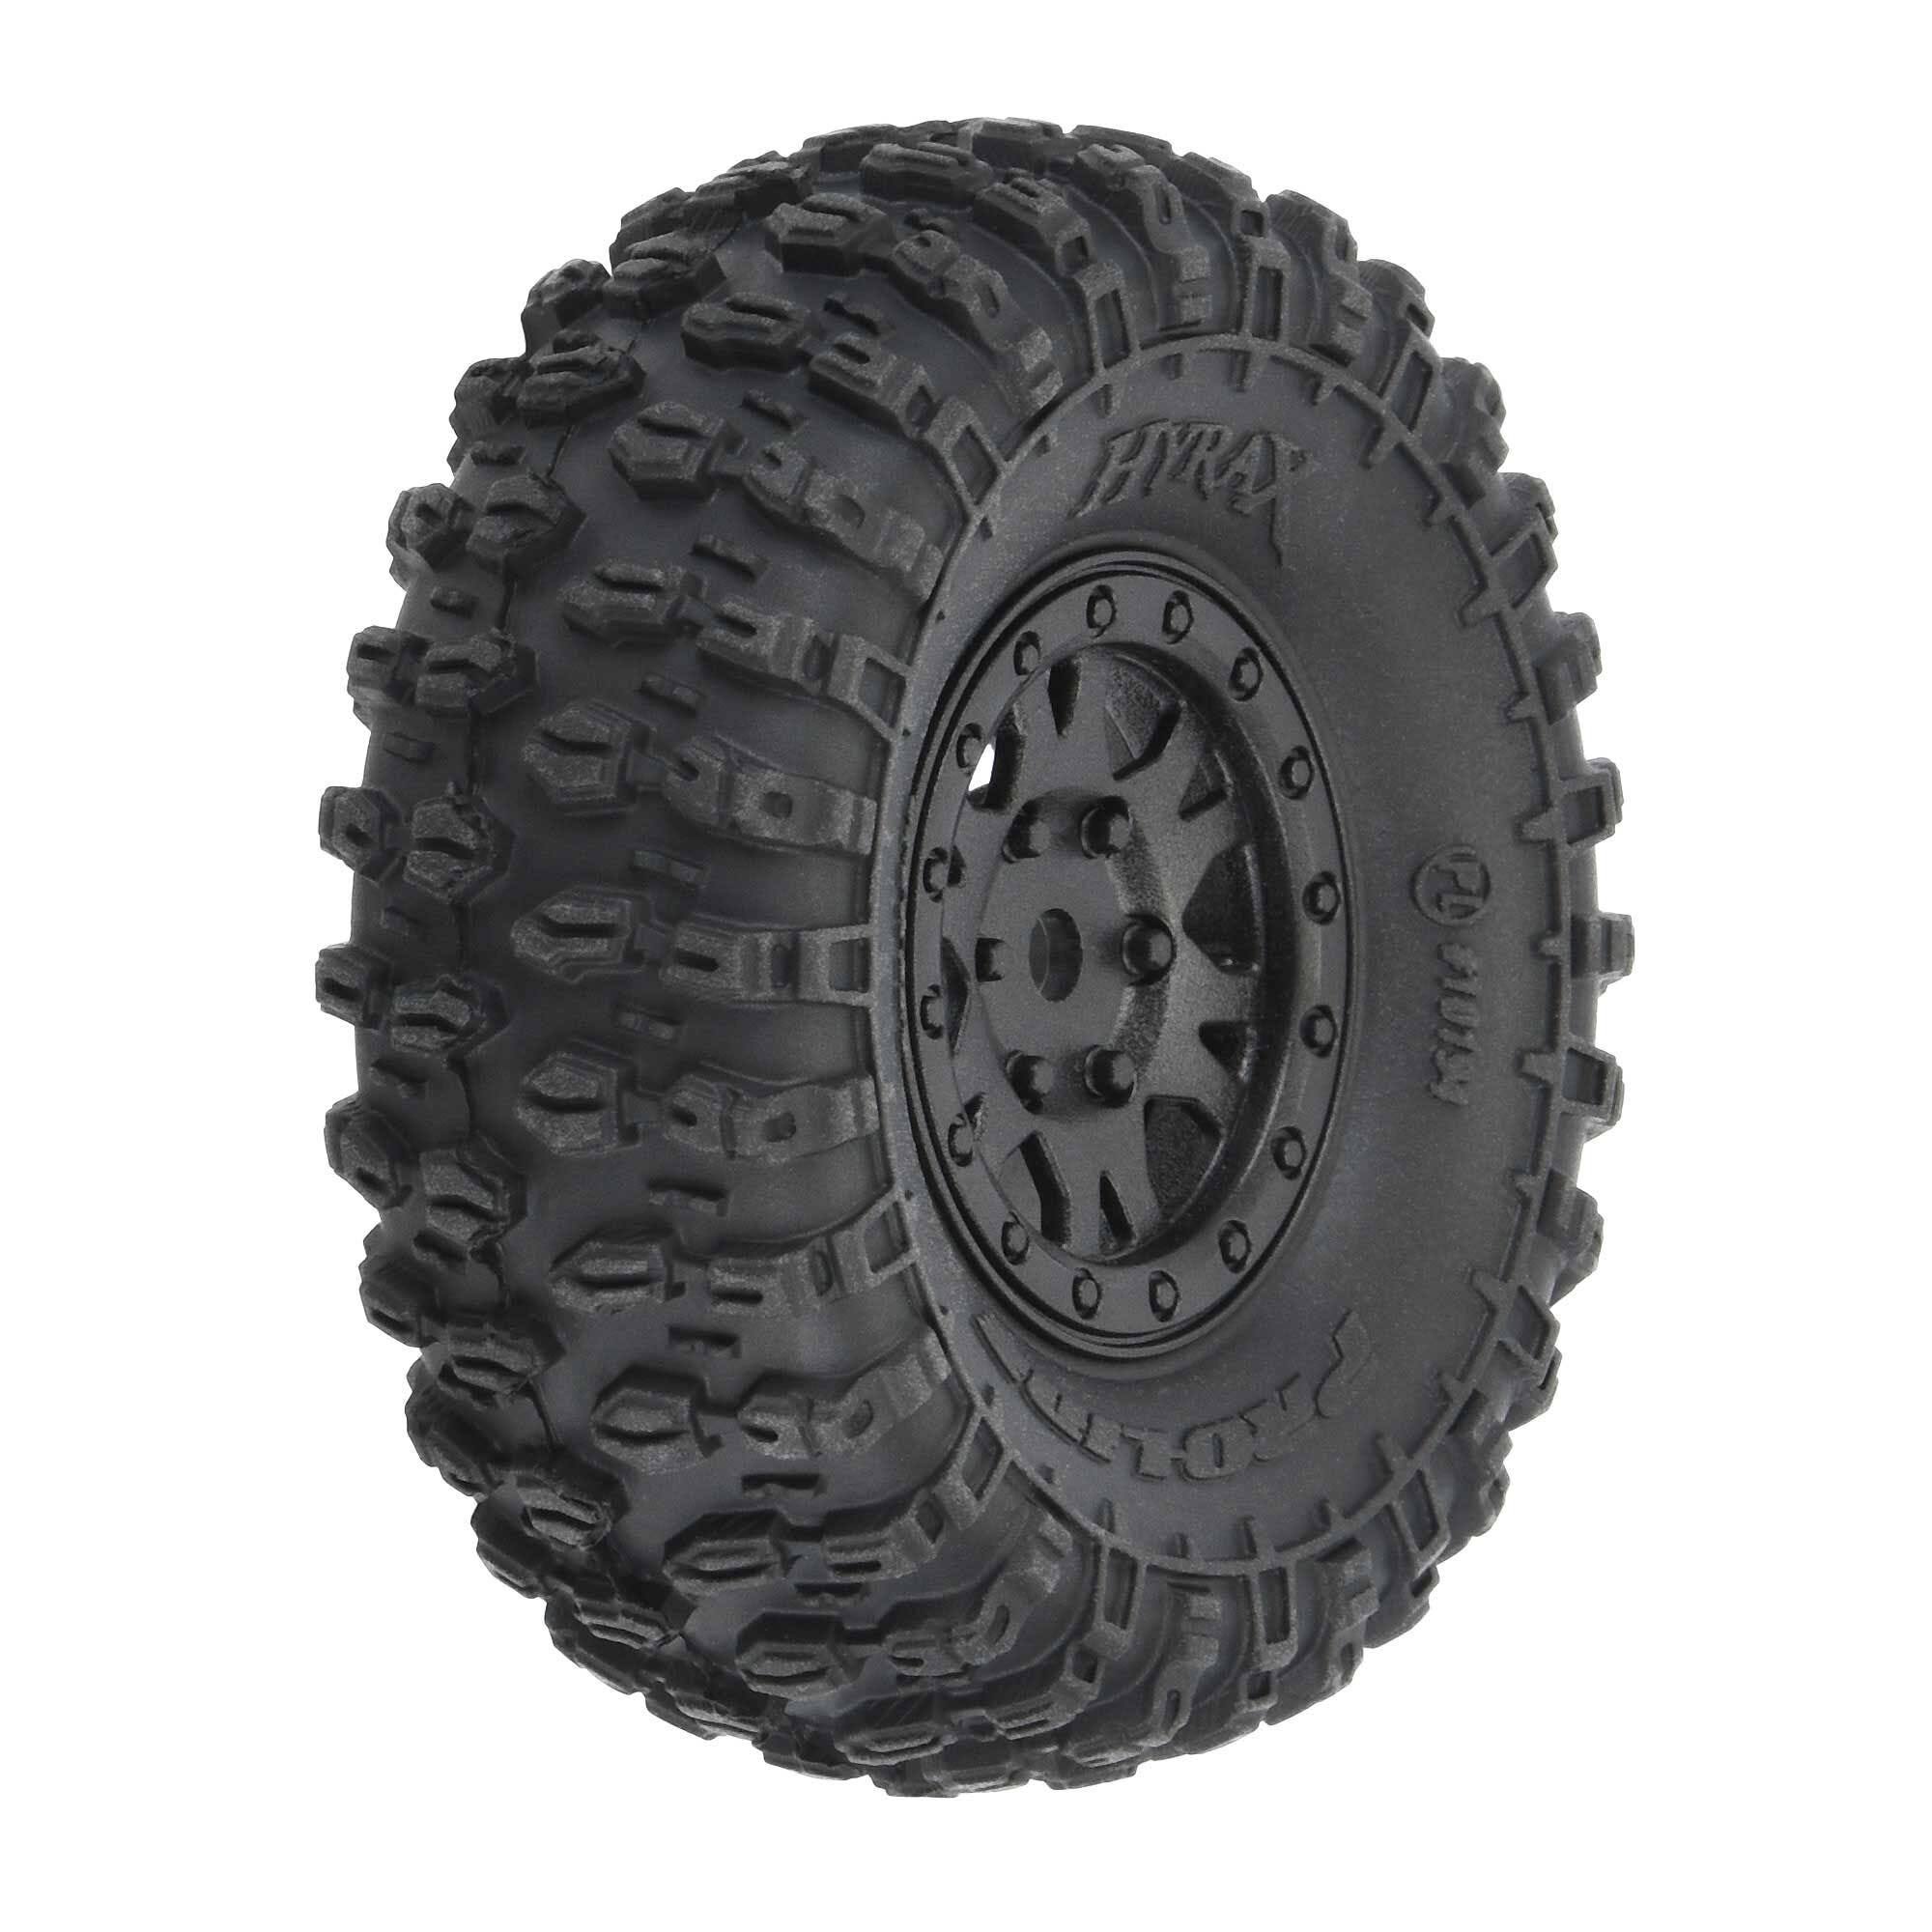 Proline 1/24 Hyrax, F/R 1.0in Tyres Mounted On Black Impulse Wheels, 4pcs, PR10194-10